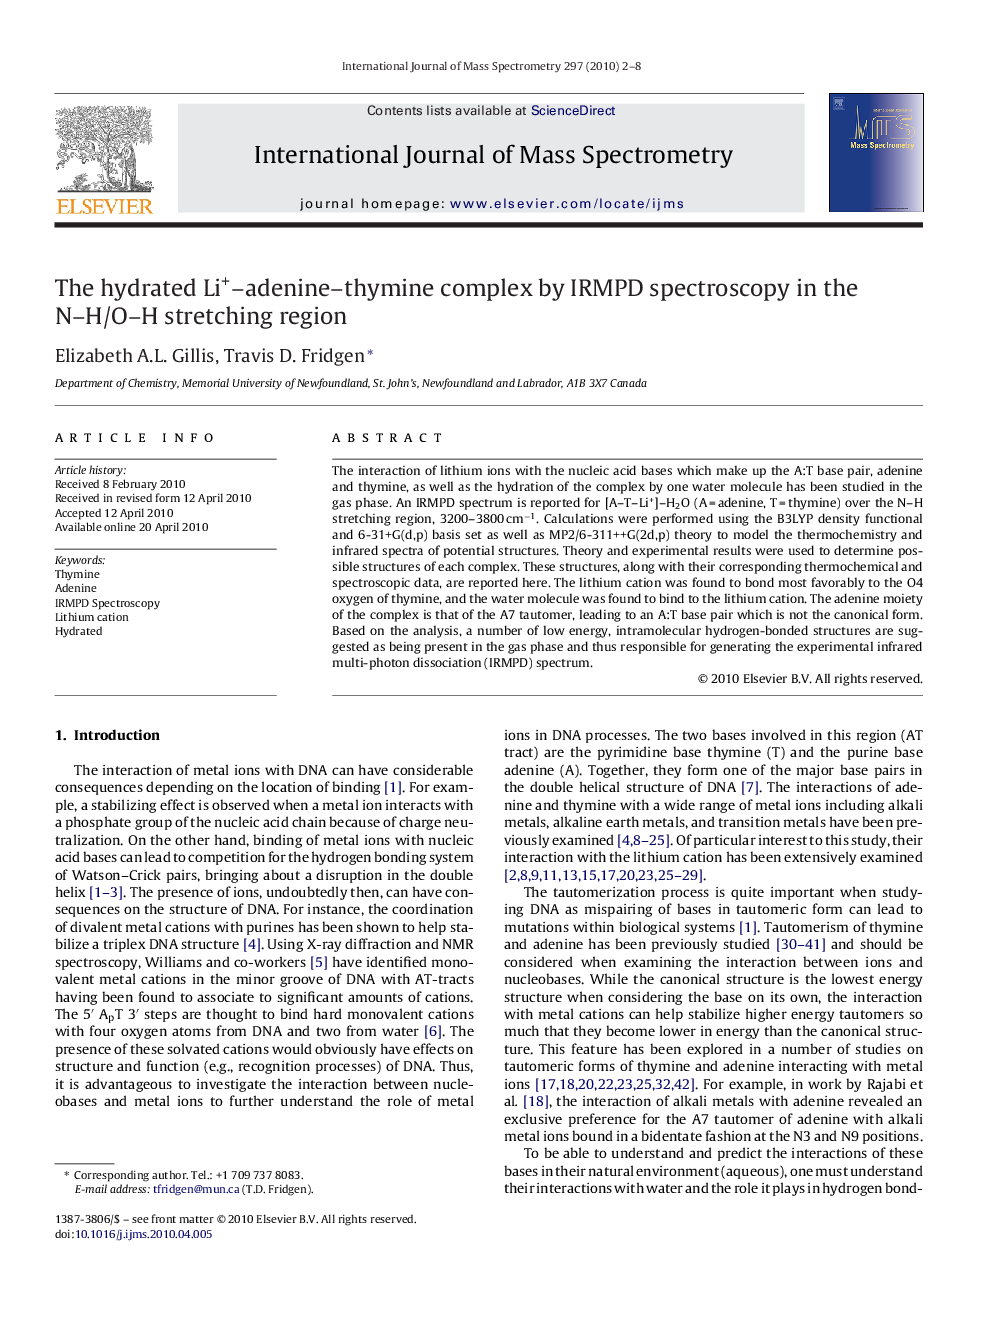 The hydrated Li+–adenine–thymine complex by IRMPD spectroscopy in the N–H/O–H stretching region